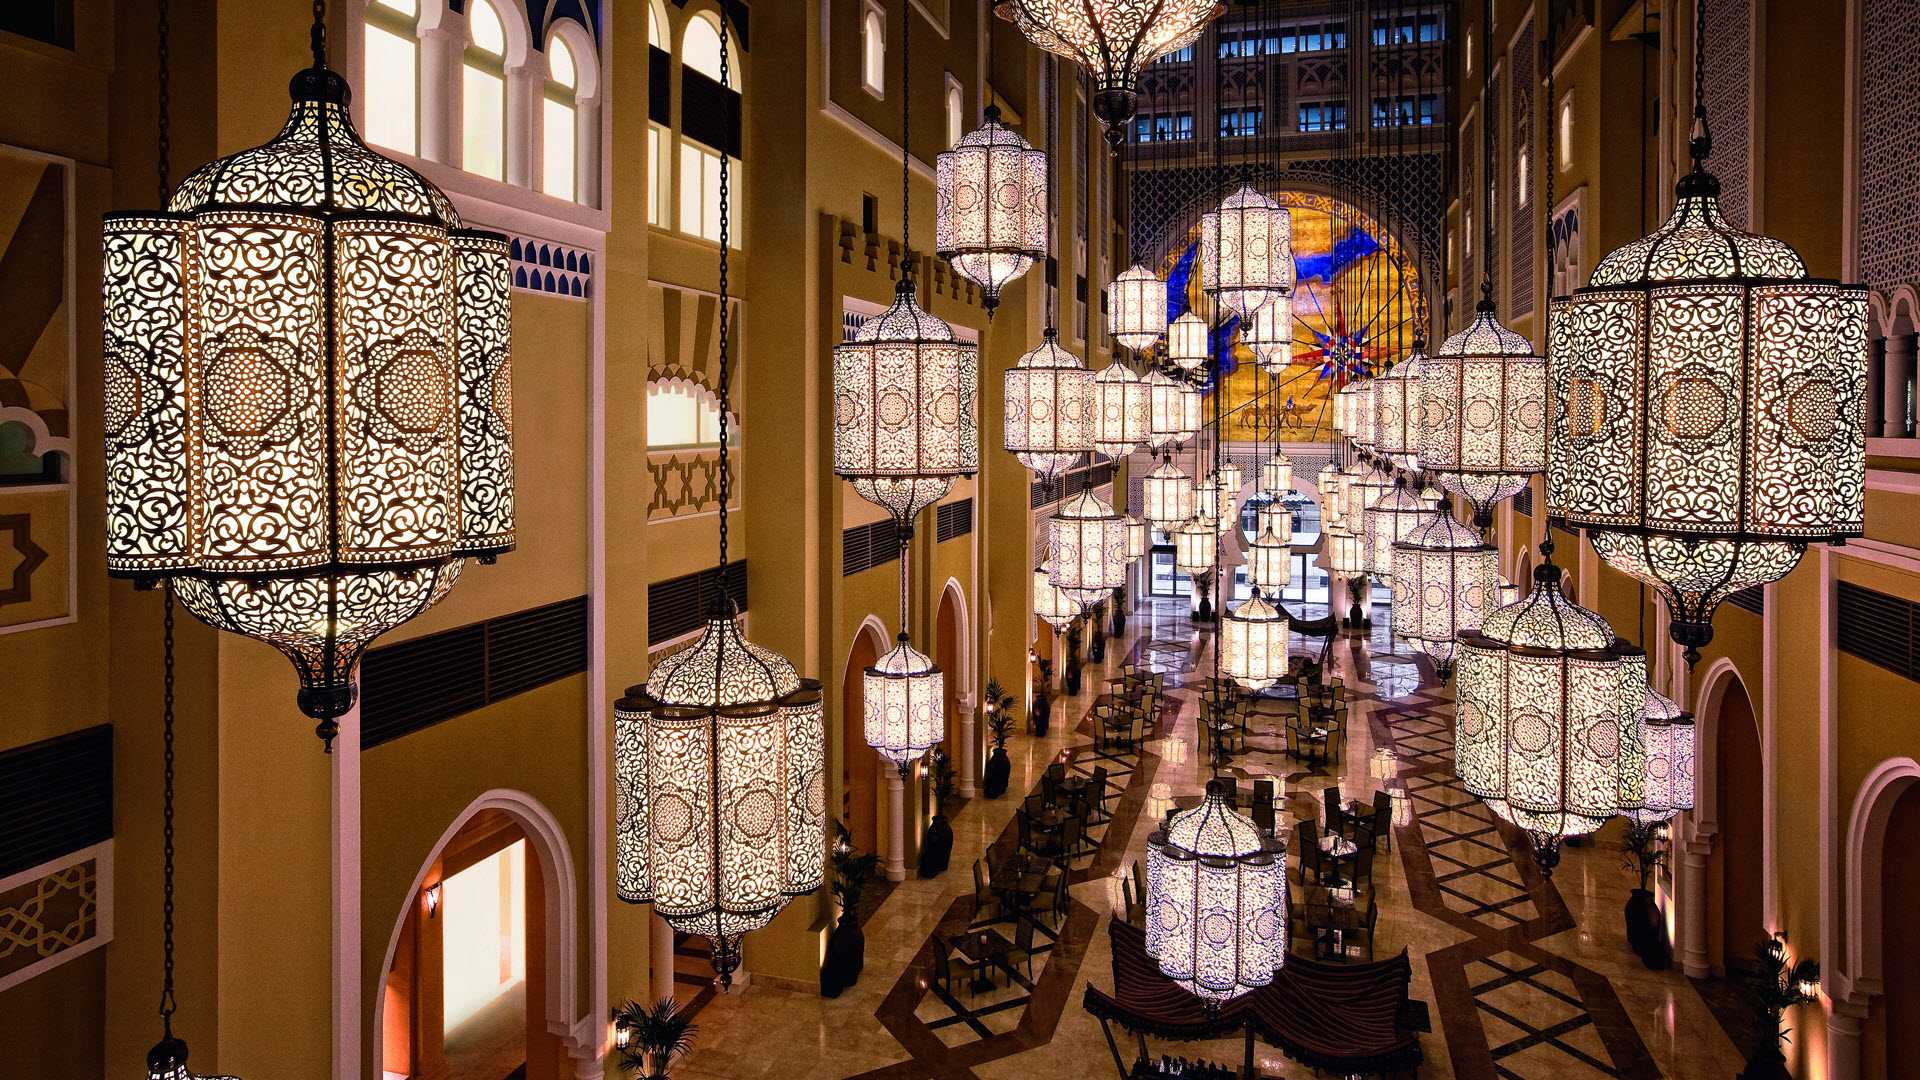 Oaks IBN Battuta Gate Hotel Dubai? Hotel Lanterns